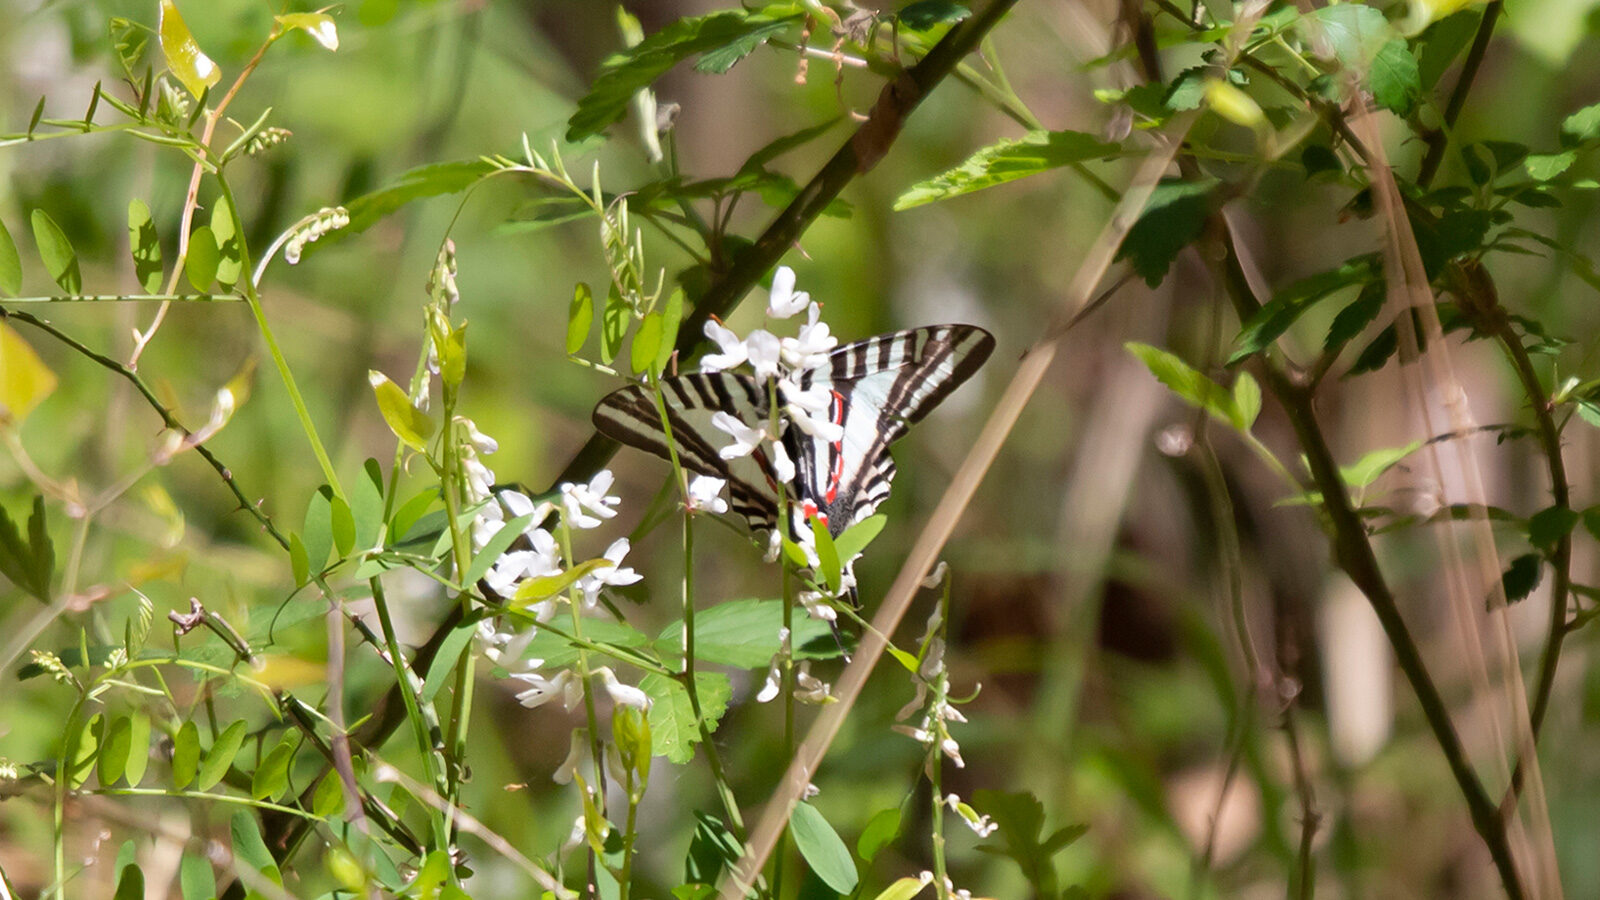 Zebra swallowtail butterfly drinking nectar